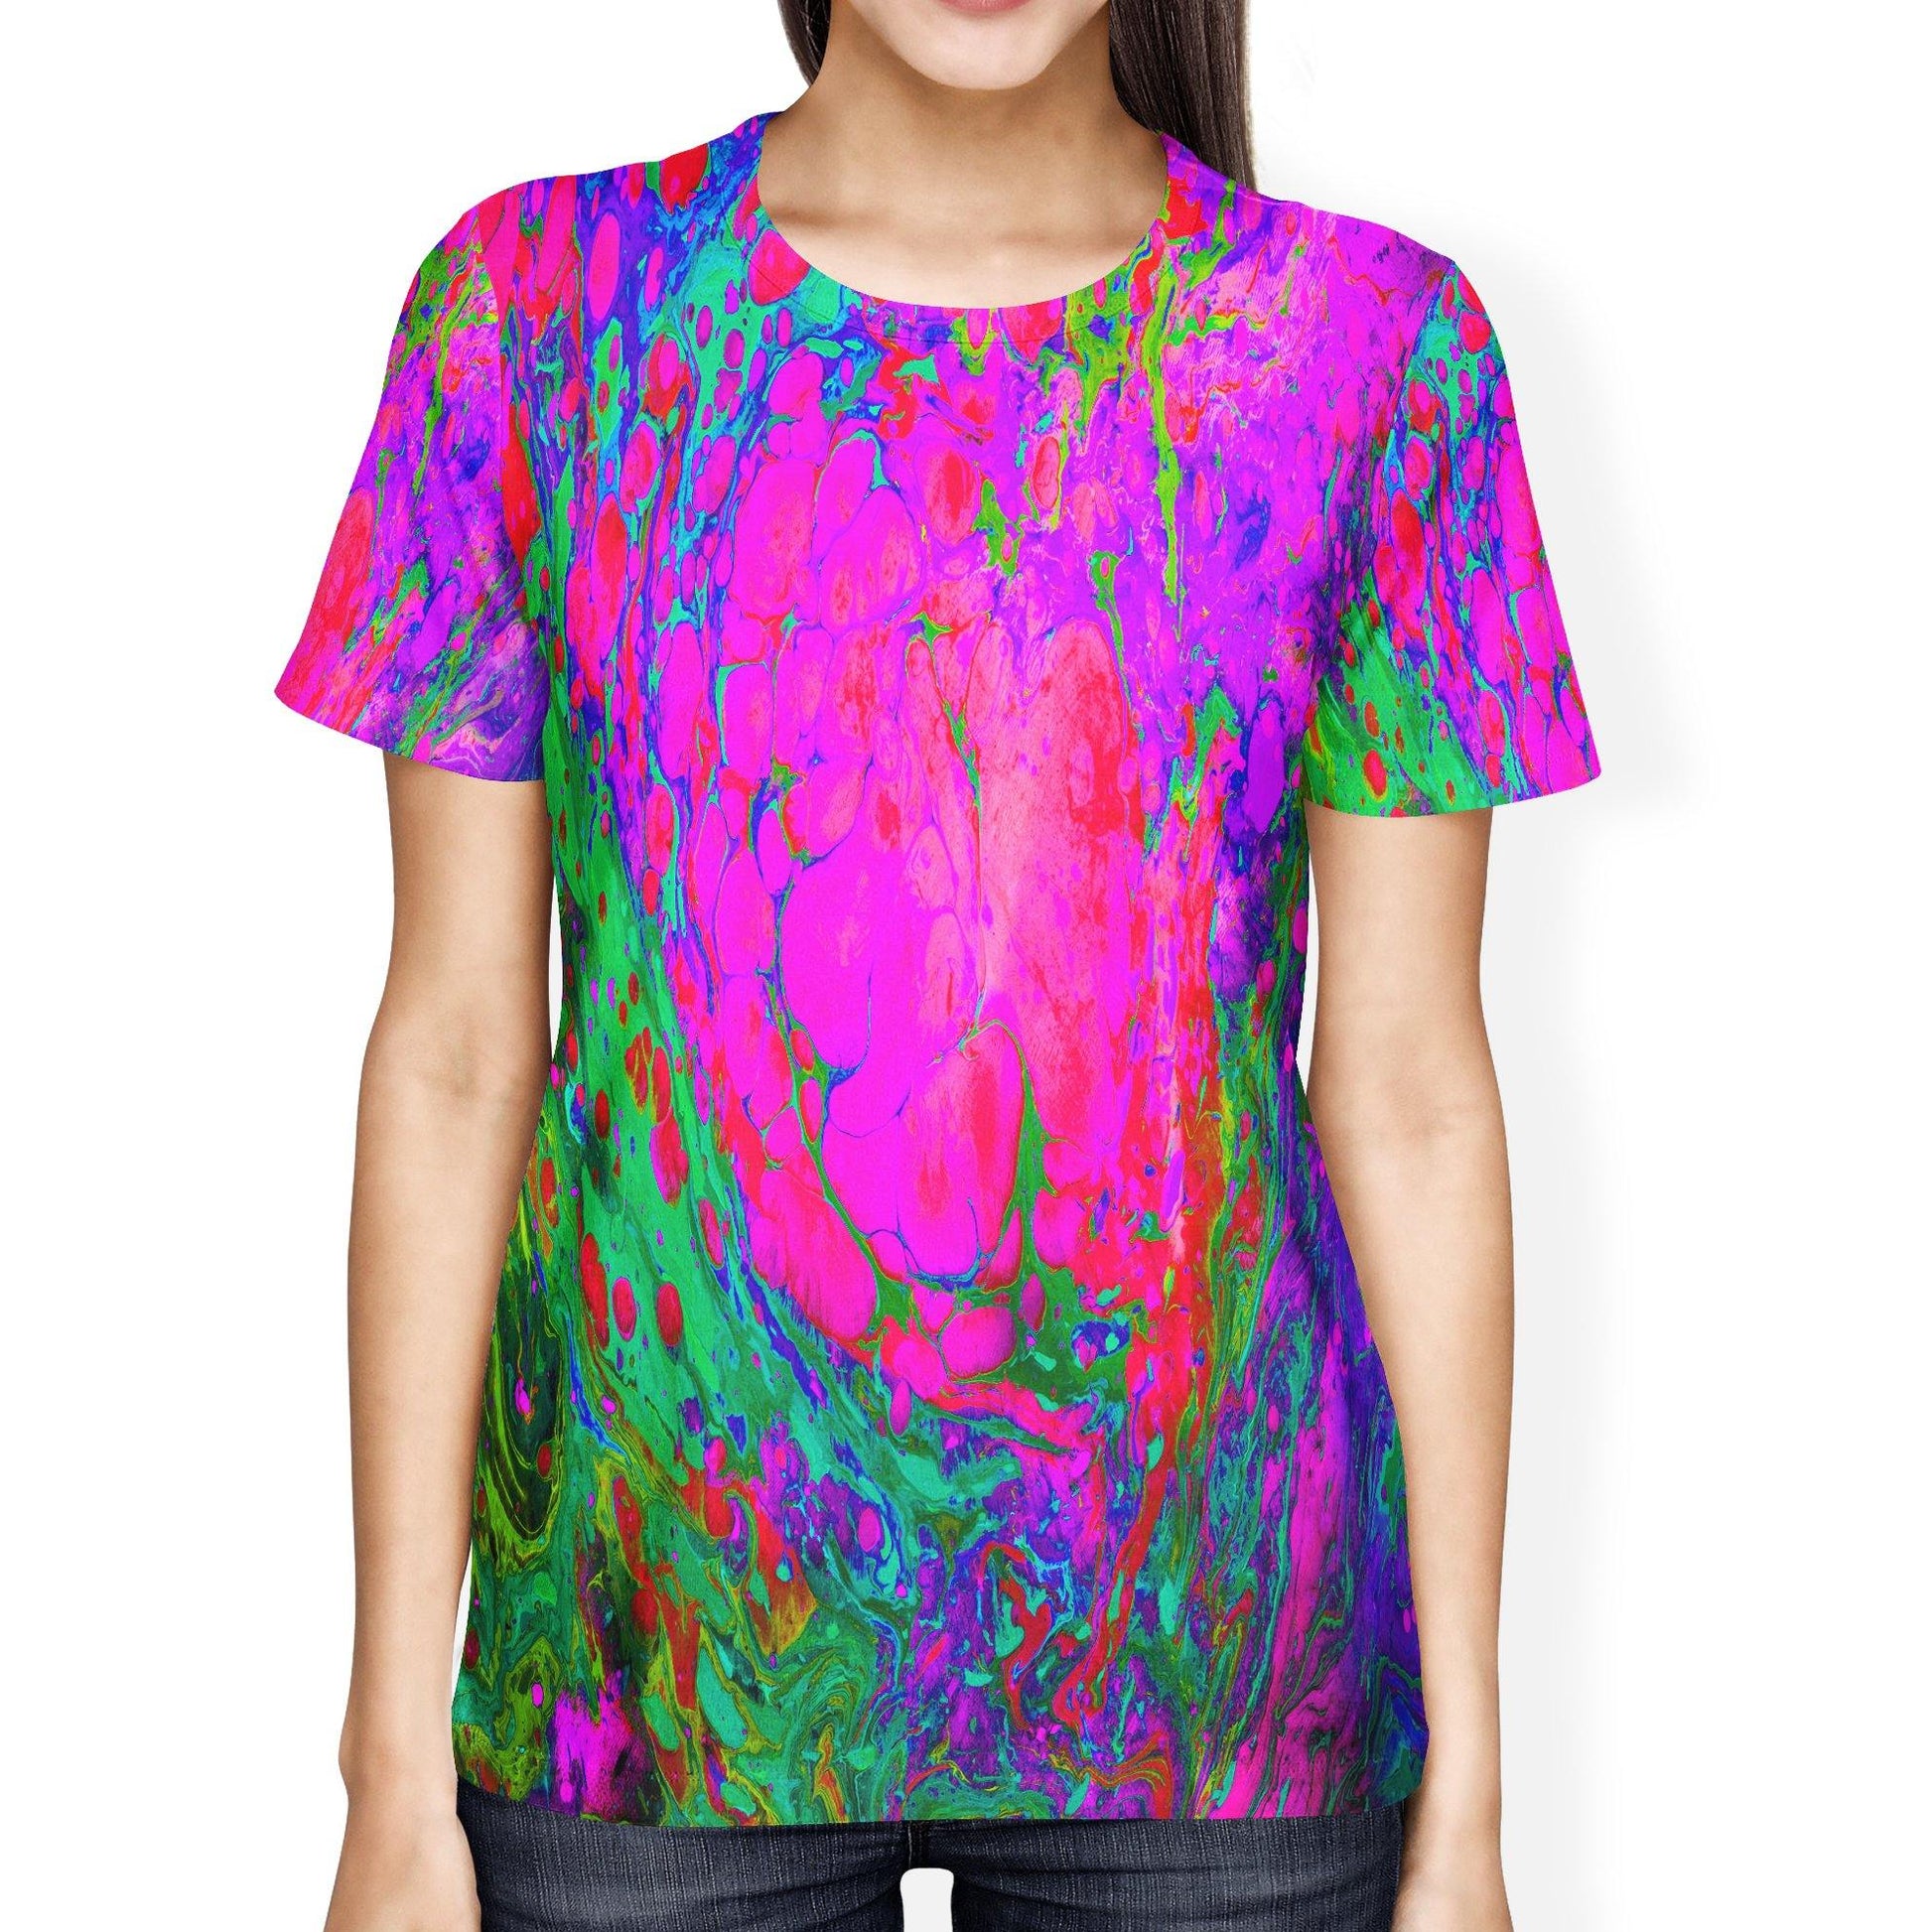 Acid Wash Ladies T-shirt - USA Made Dropship